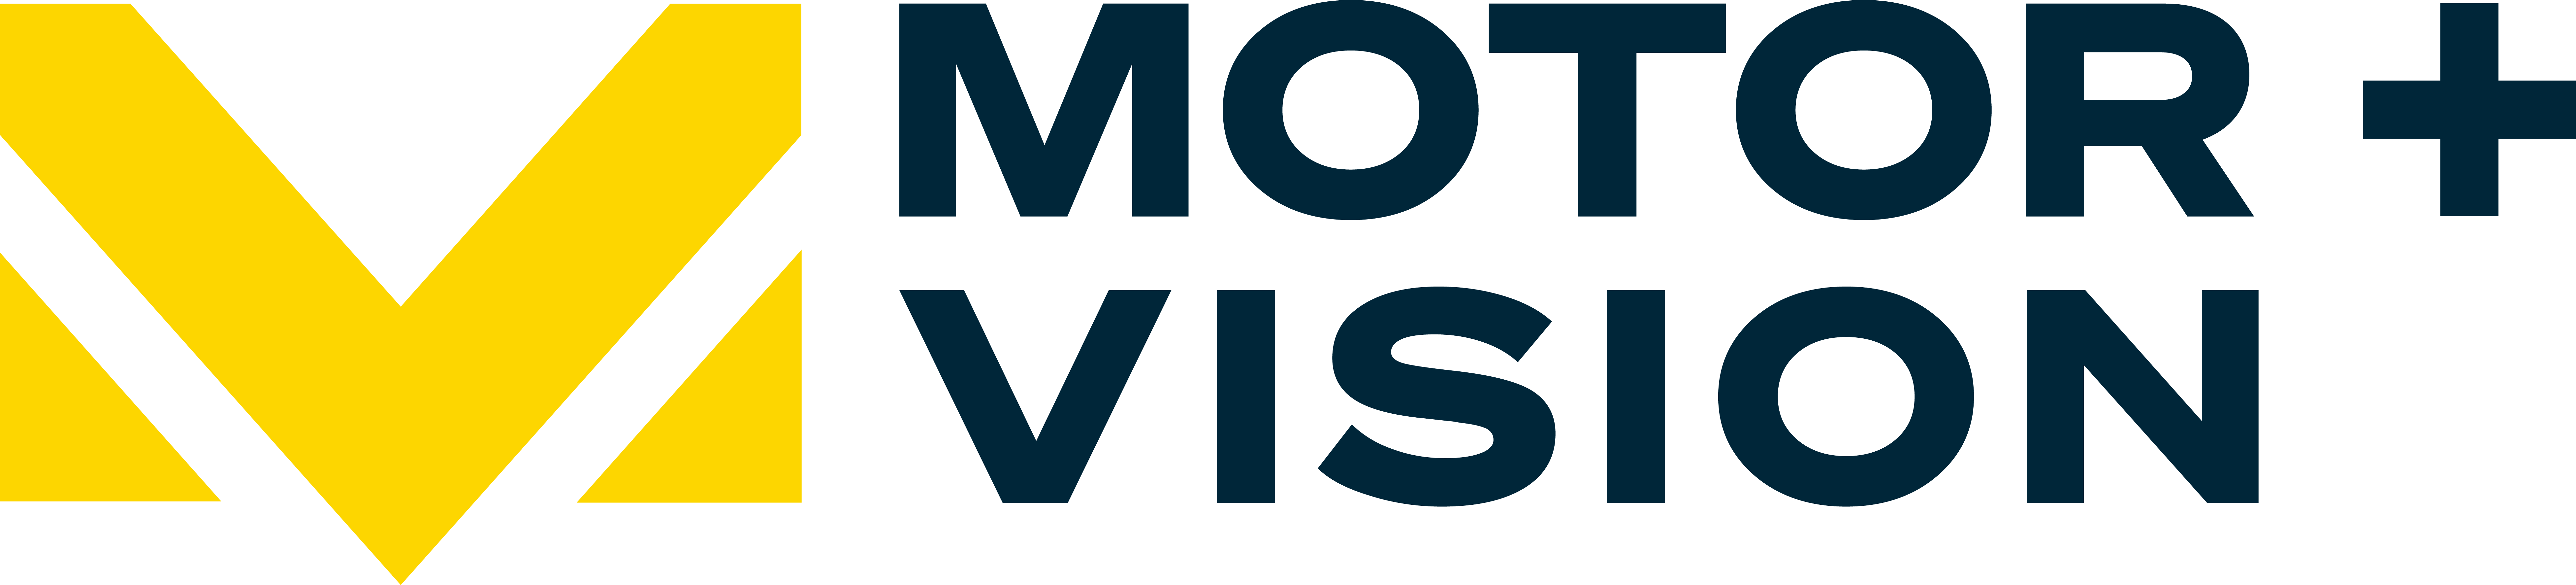 Motorvision TV HD F